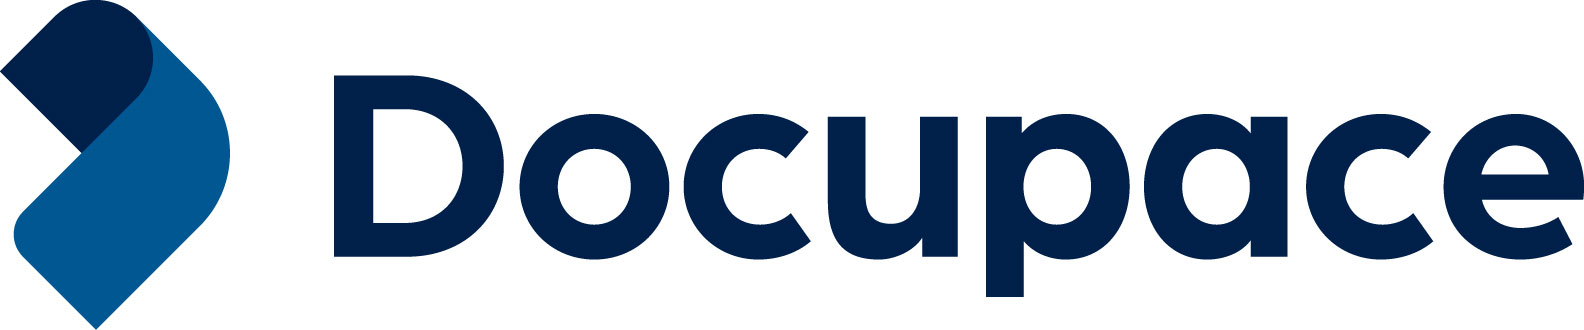 Docupace Technologies, LLC. logo